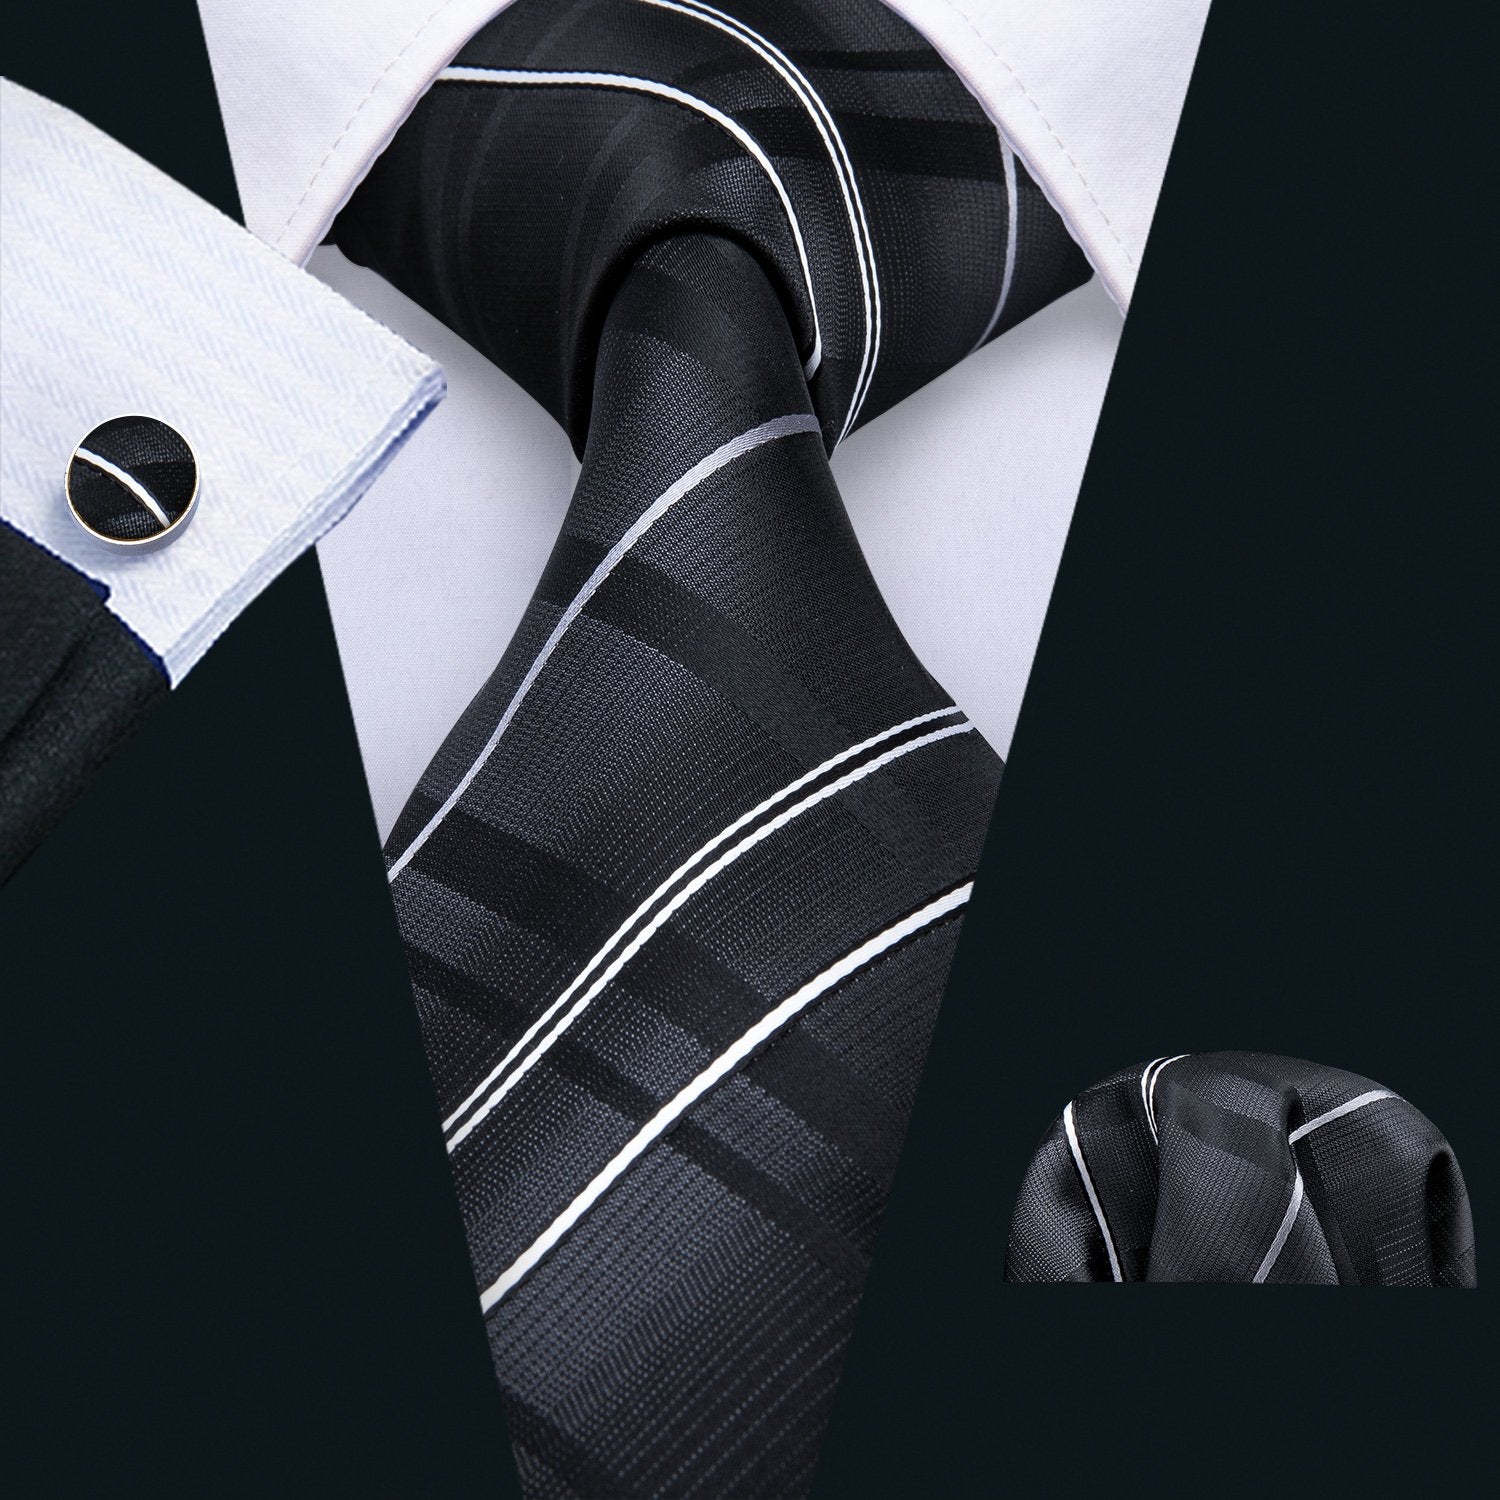 Sliver Grey Striped 100% Silk Tie Hanky Cufflinks Set - barry-wang